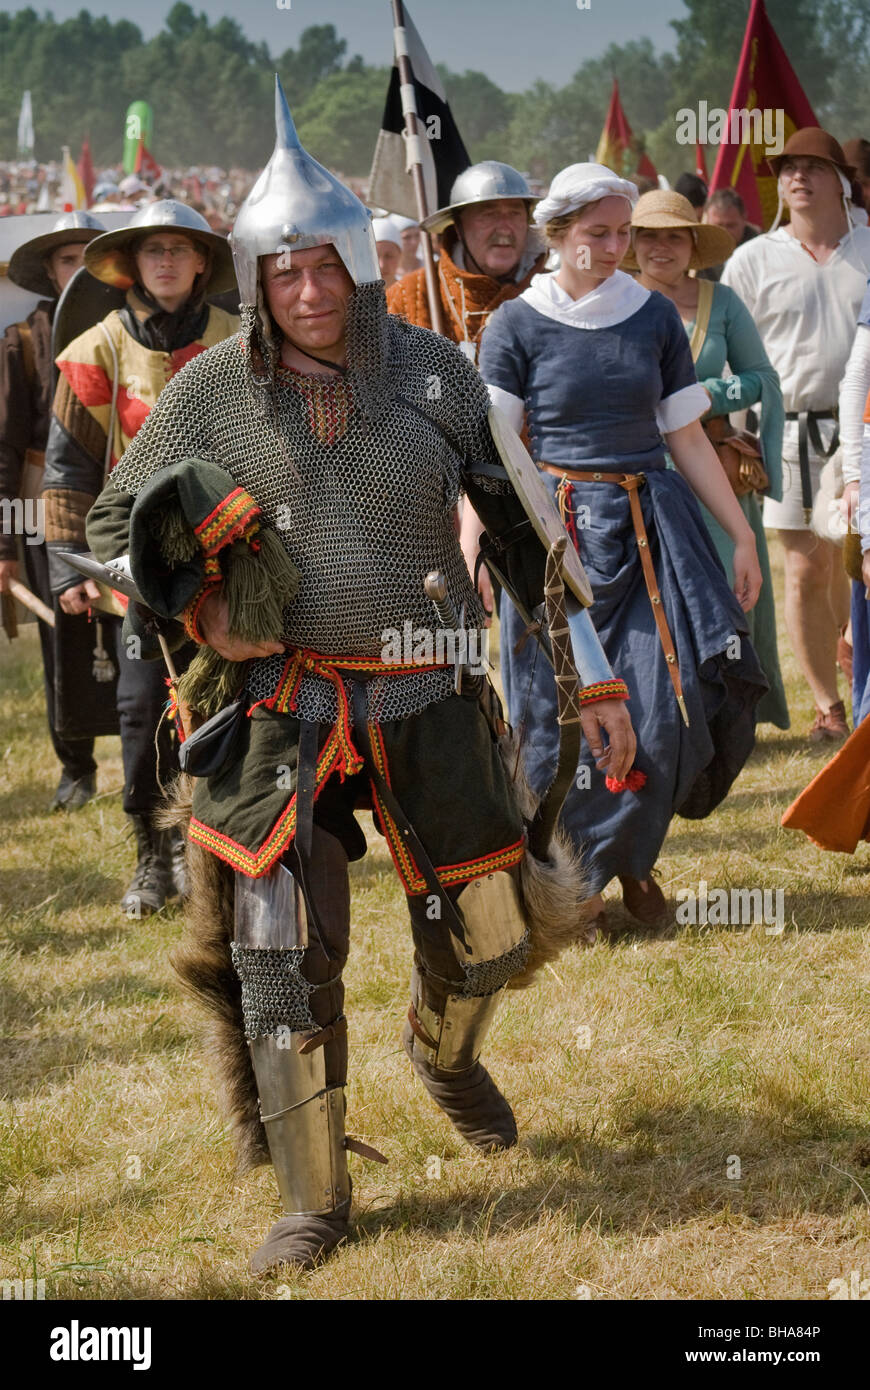 Reenactors leaving battlefield after recreating 1410 Battle of Grunwald Warminsko-Mazurskie, Poland Stock Photo